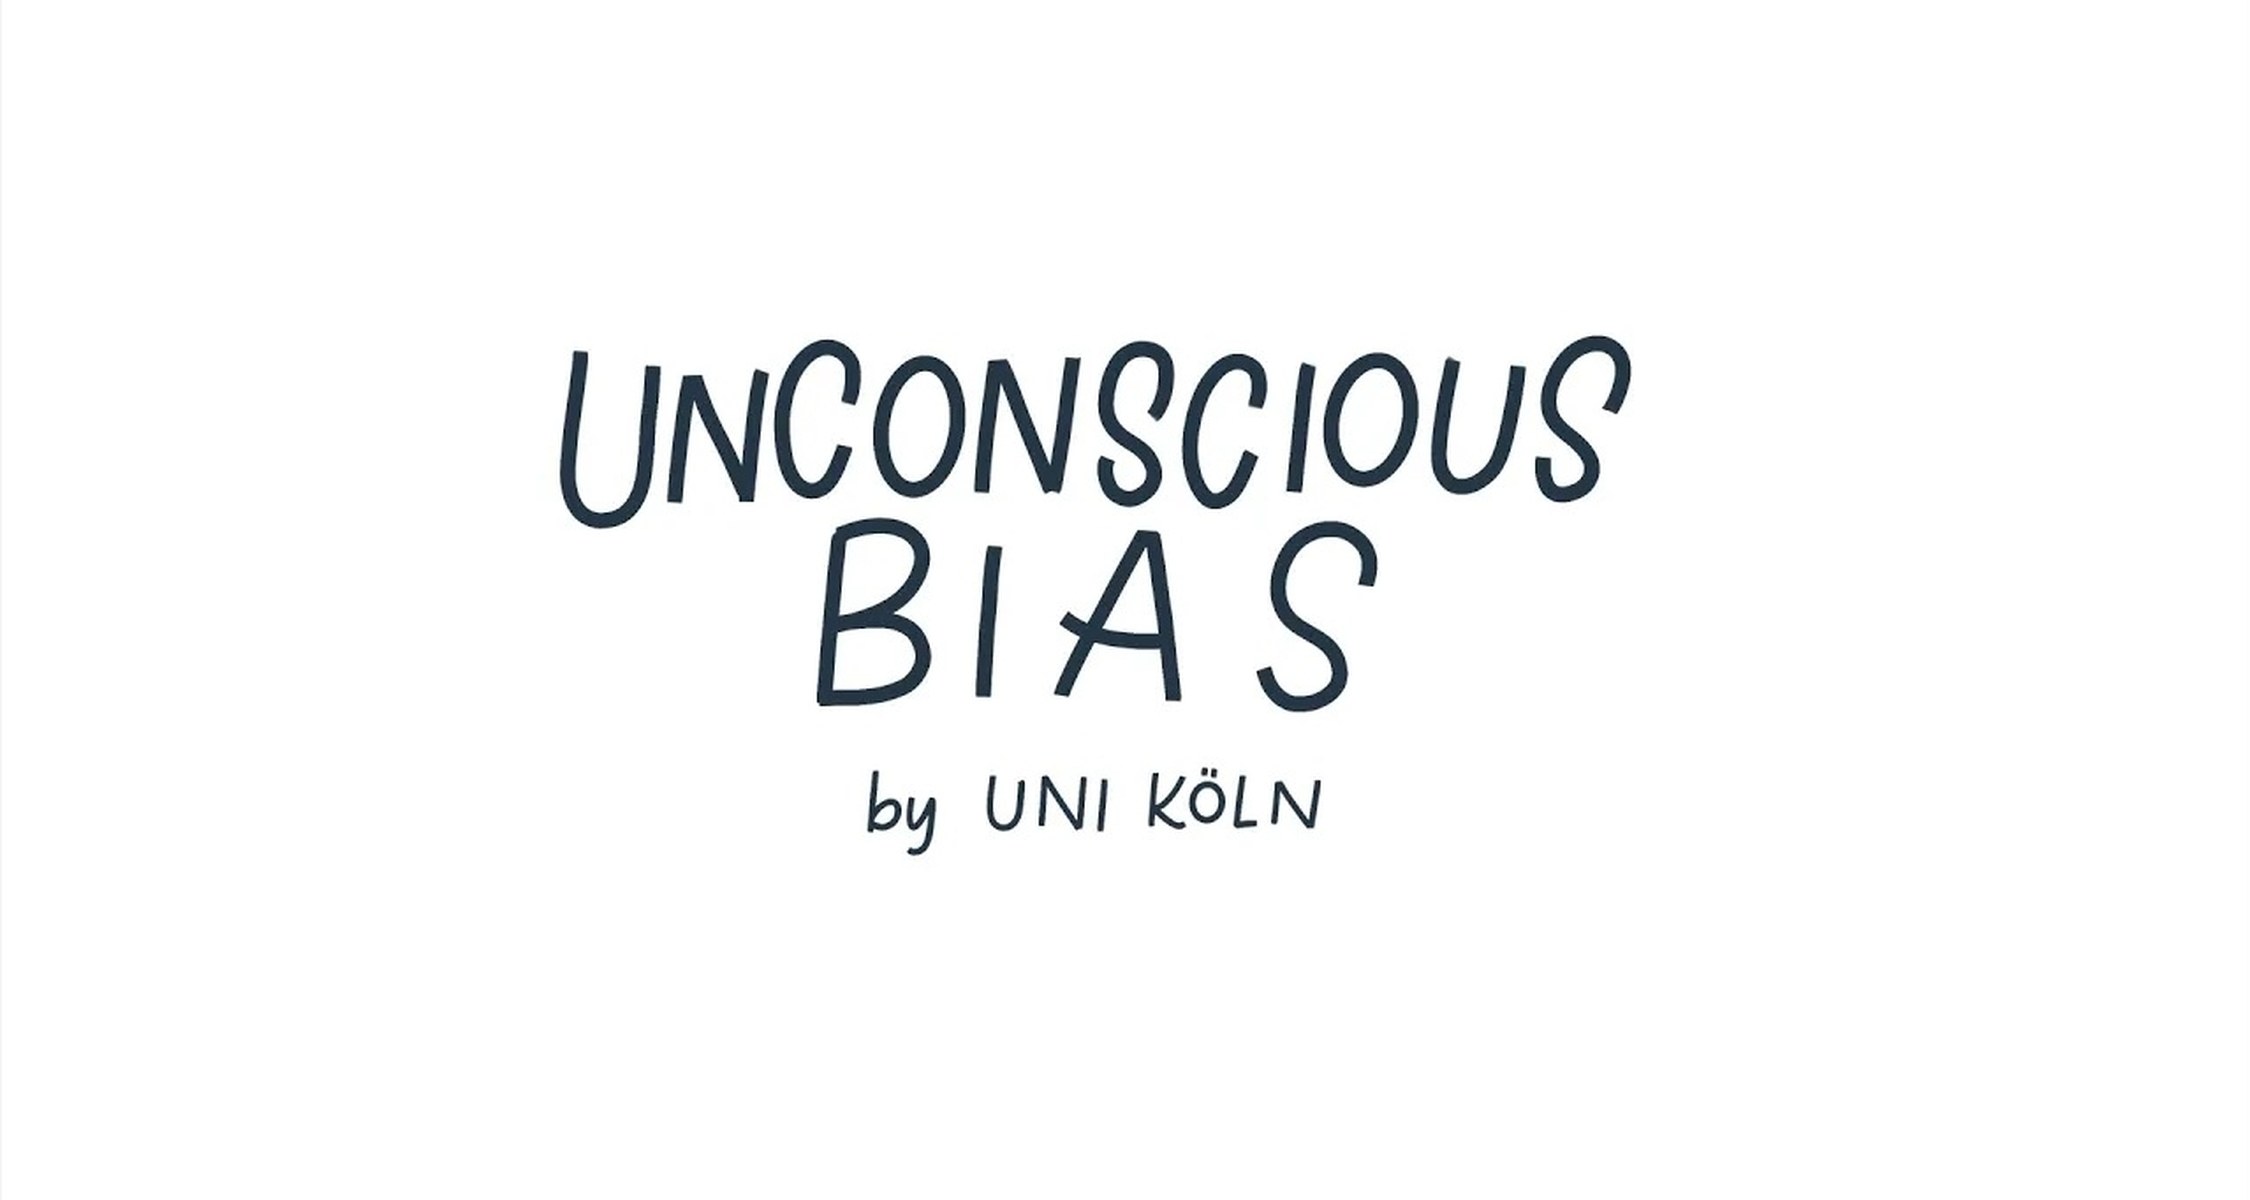 Unconscious Bias by Uni Köln